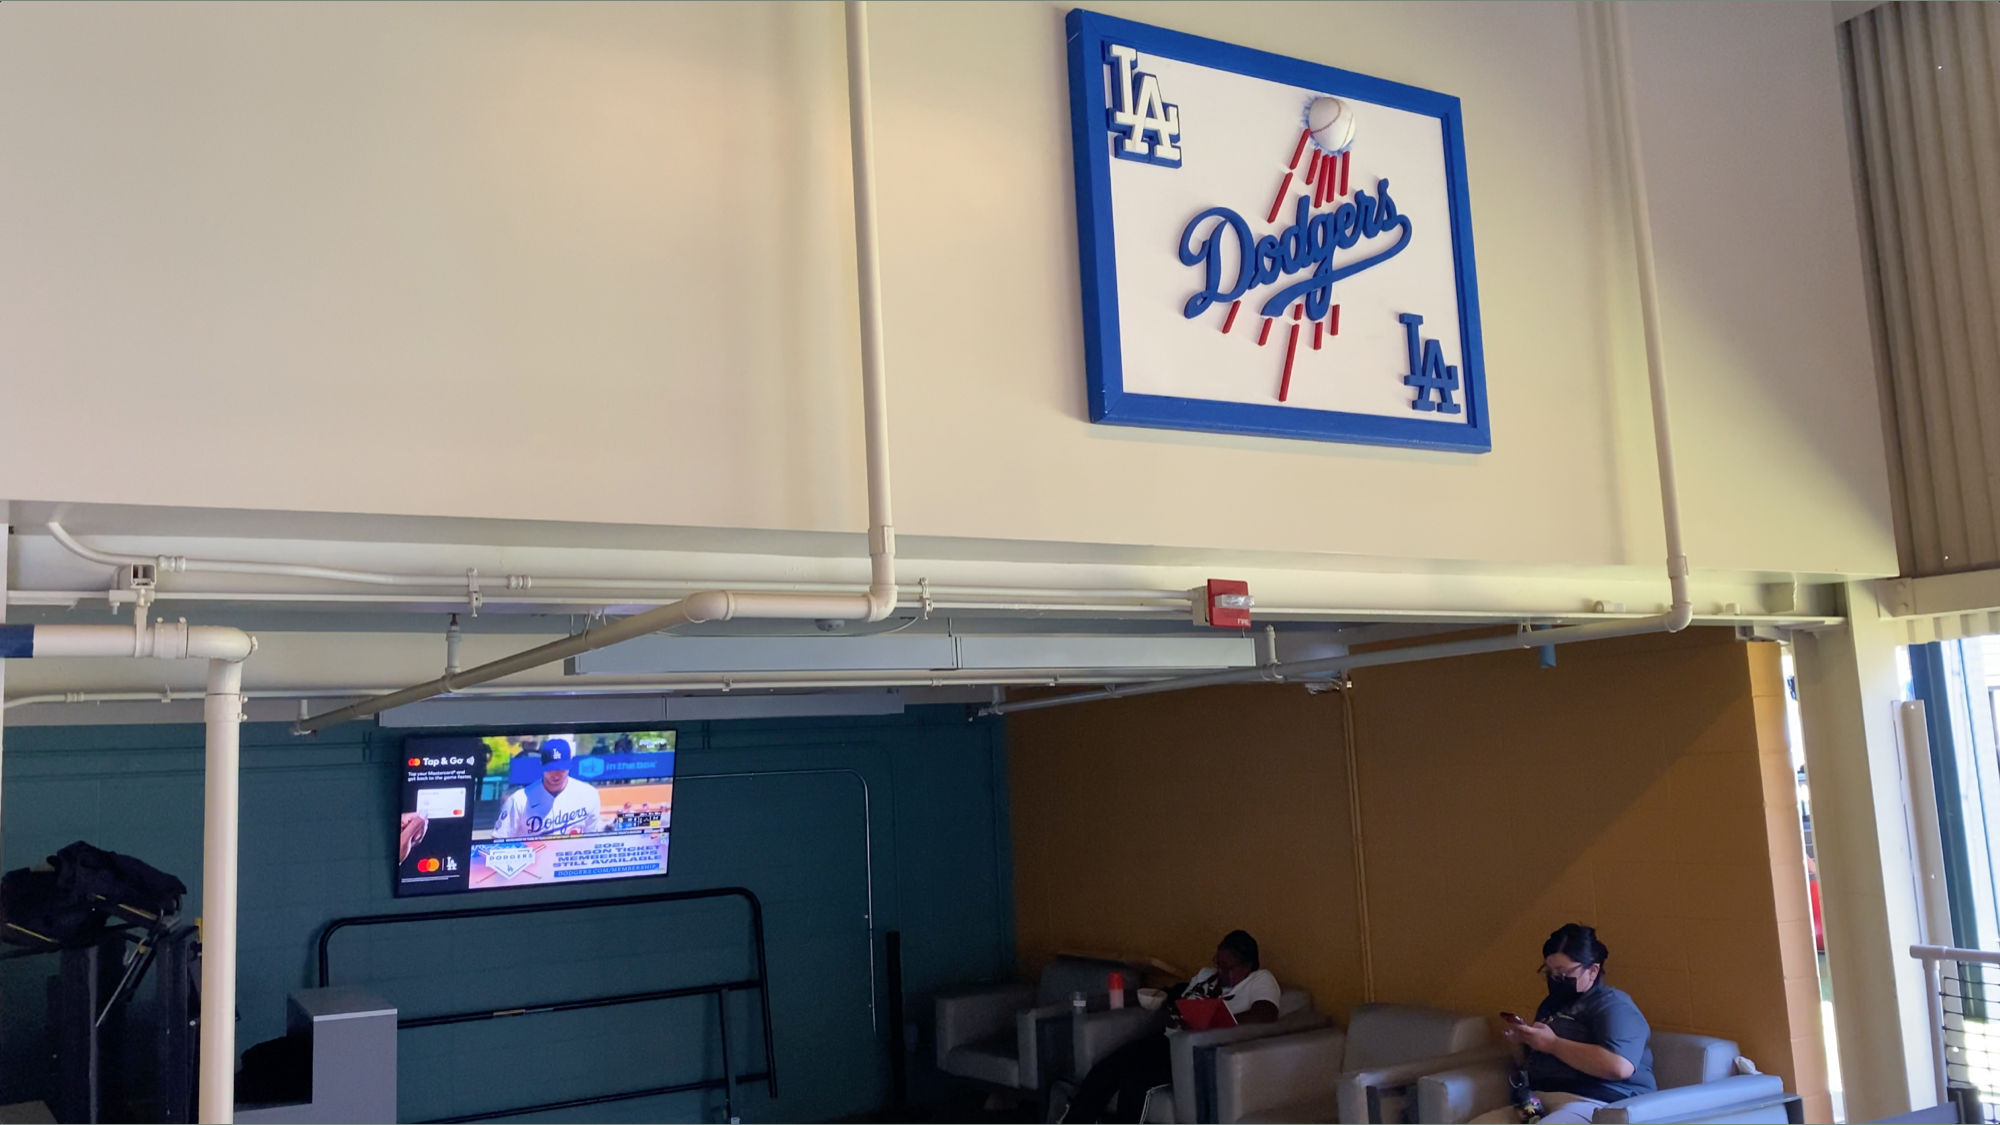 Logos Dodgers and LA